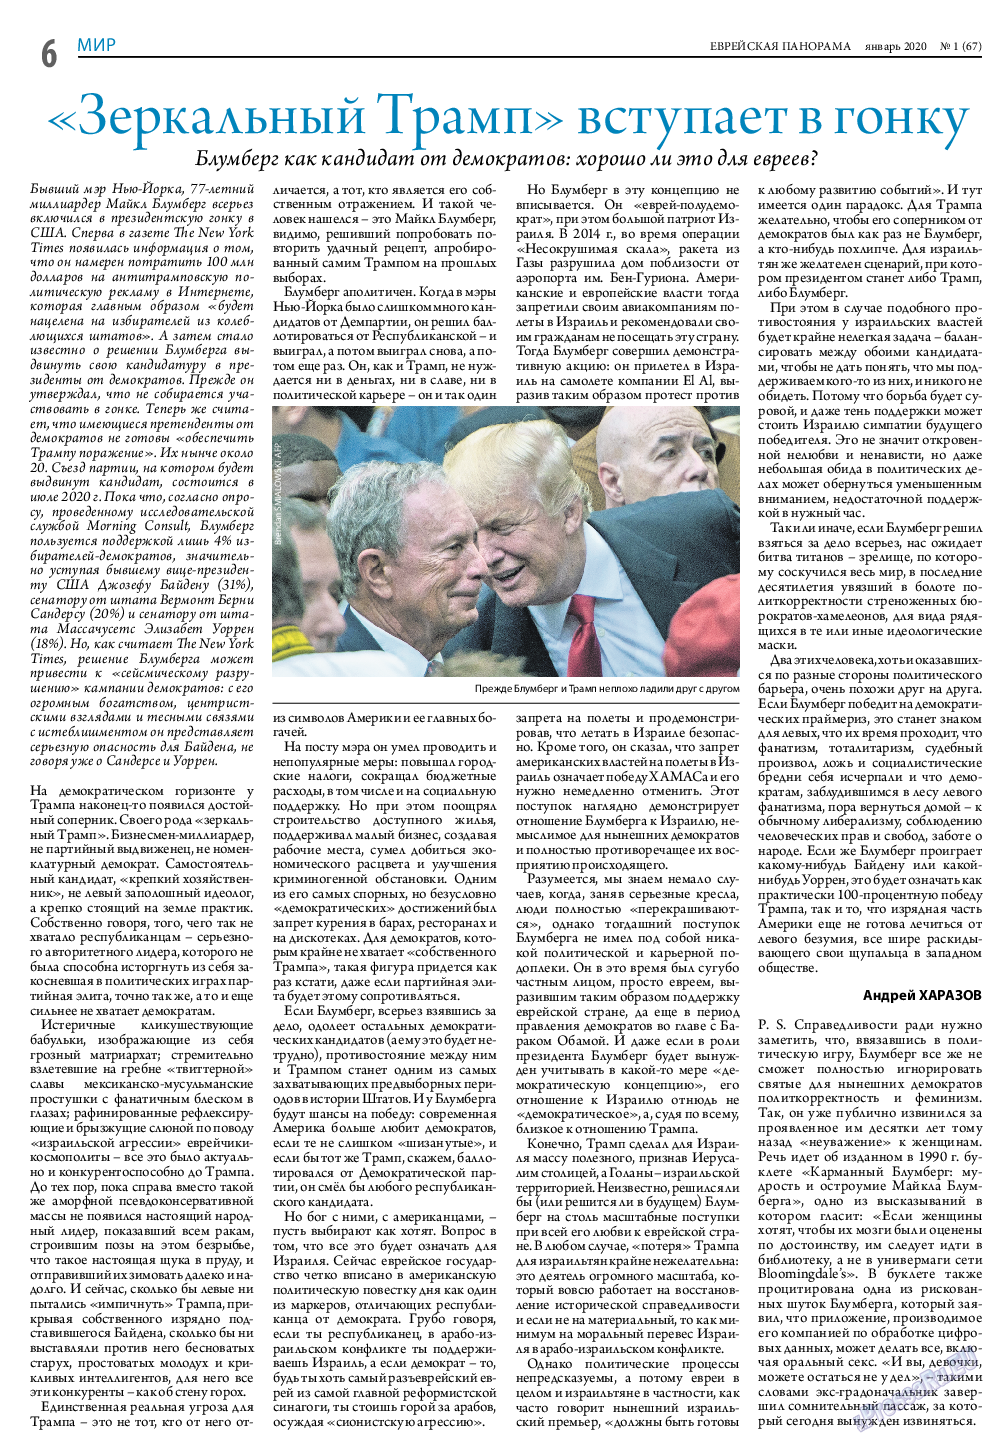 Еврейская панорама, газета. 2020 №1 стр.6